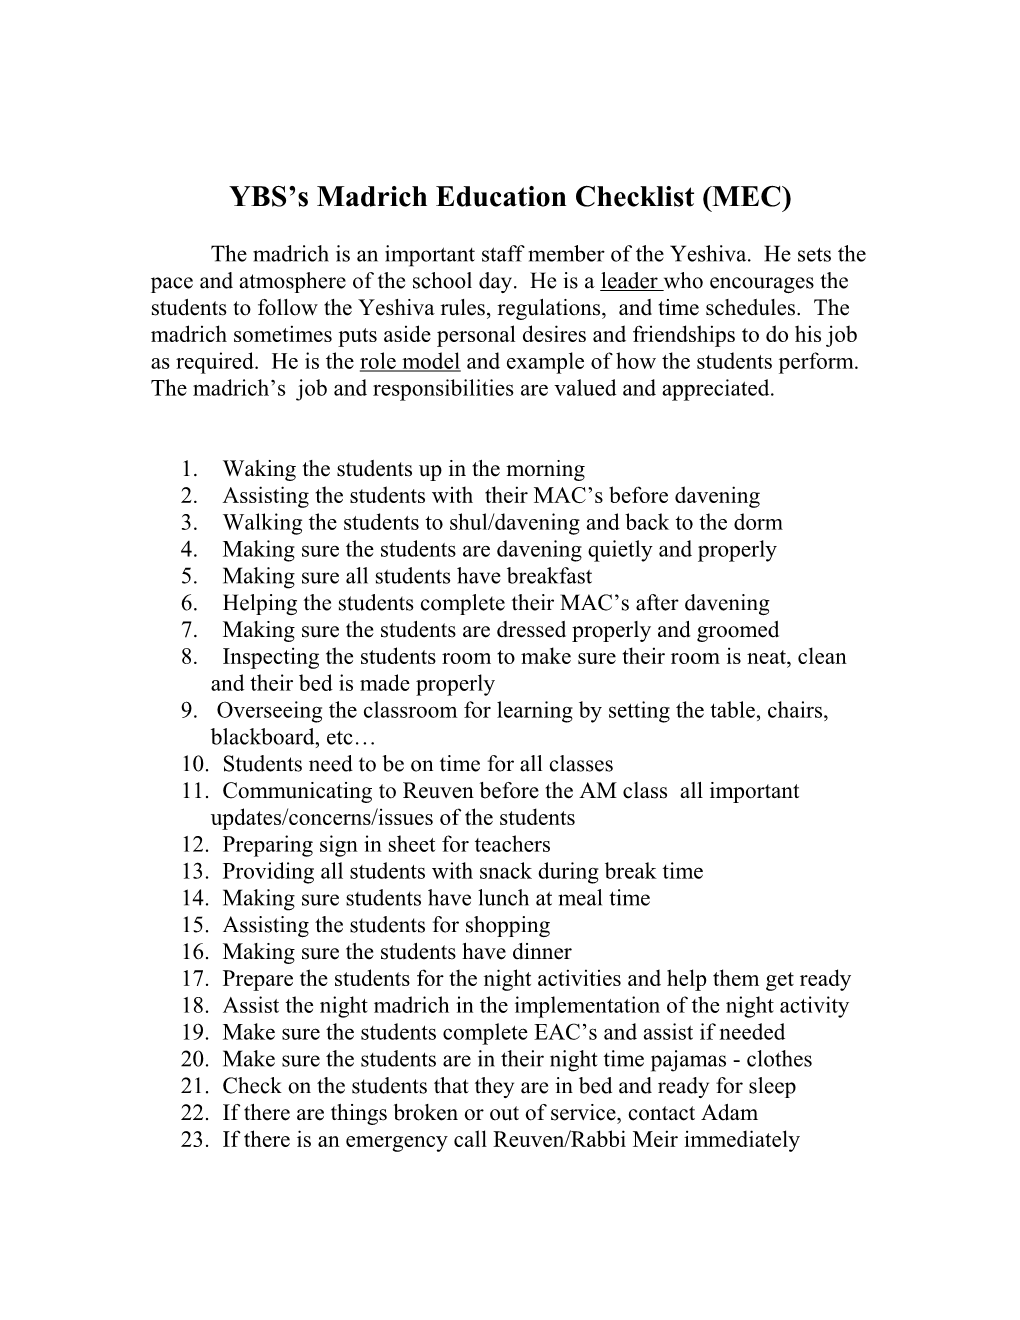 YBS S Madrich Education Checklist (MEC)